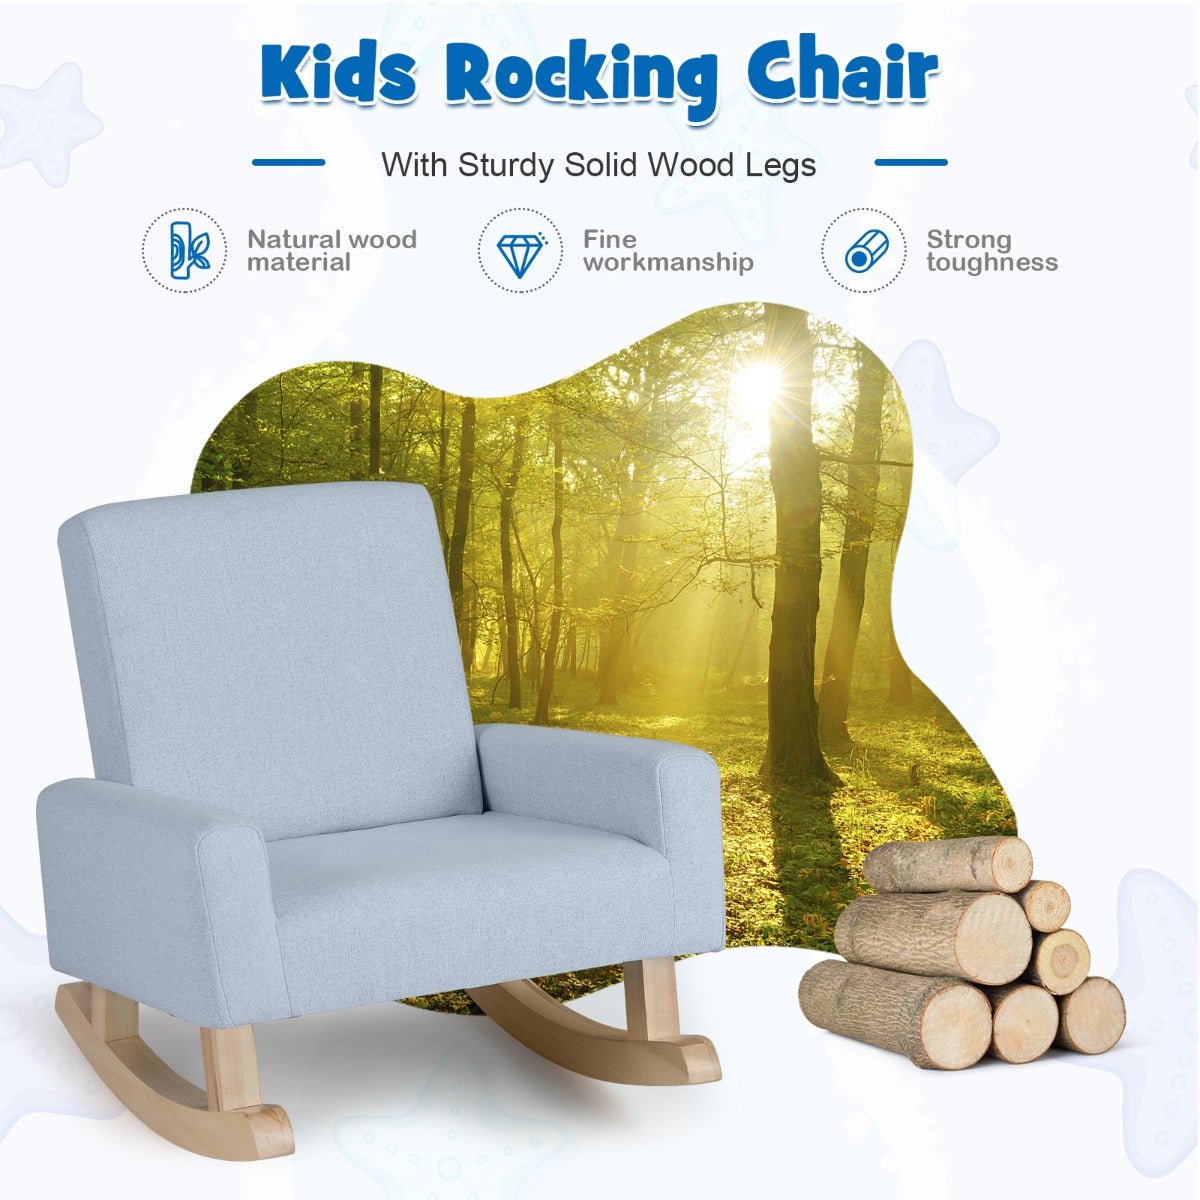 Blue Kids Rocker Chair - Sturdy Wood Legs, Anti-tipping Design for Fun